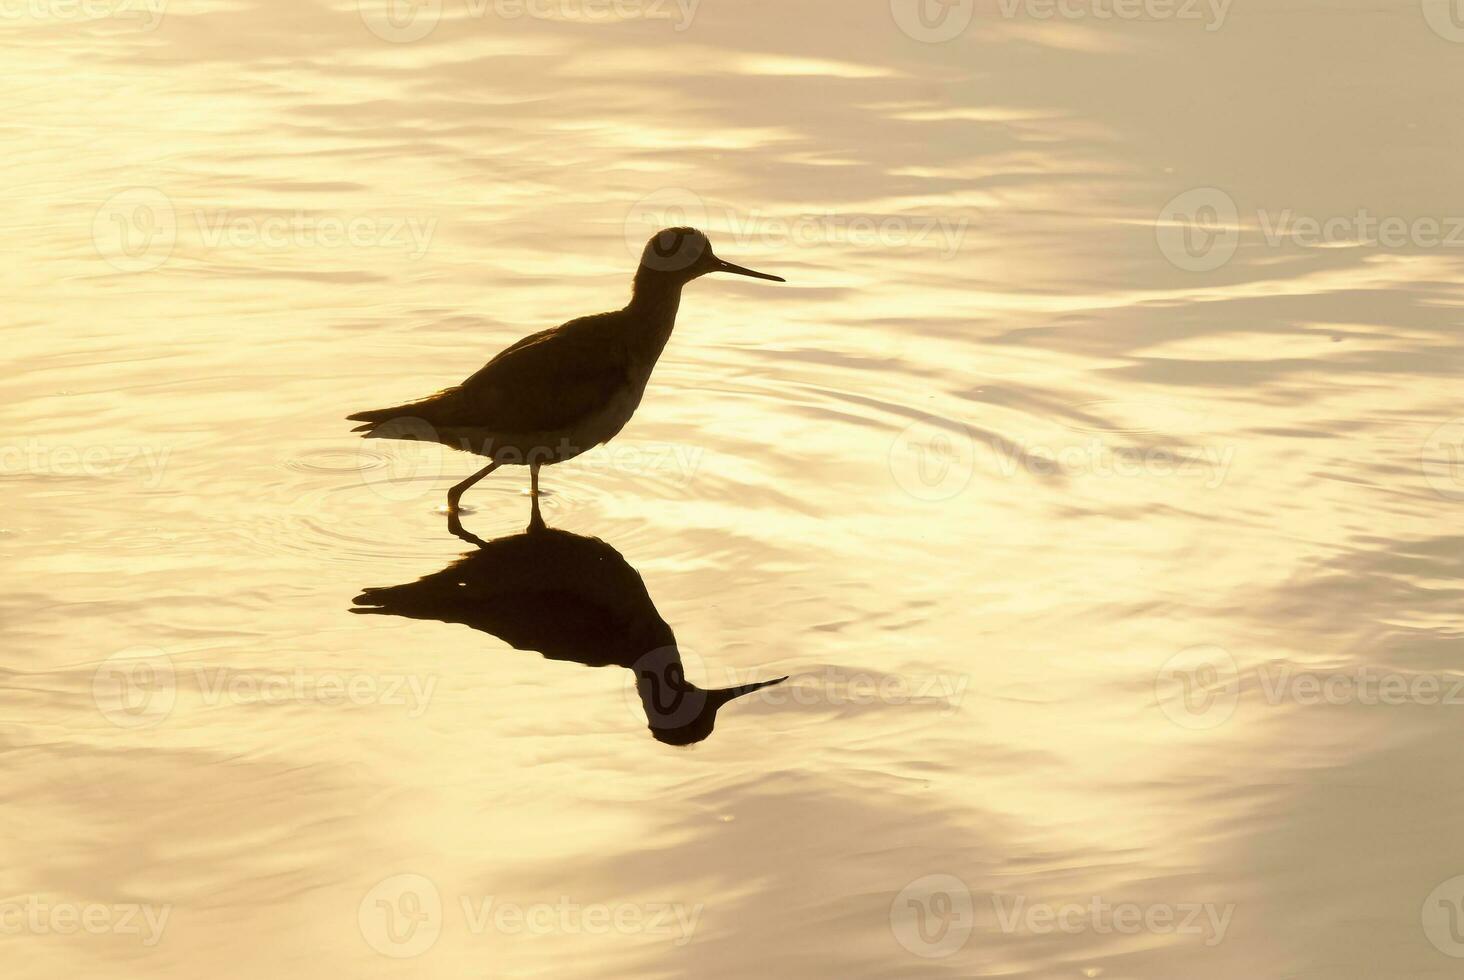 en fågel stående i de vatten med dess reflexion foto